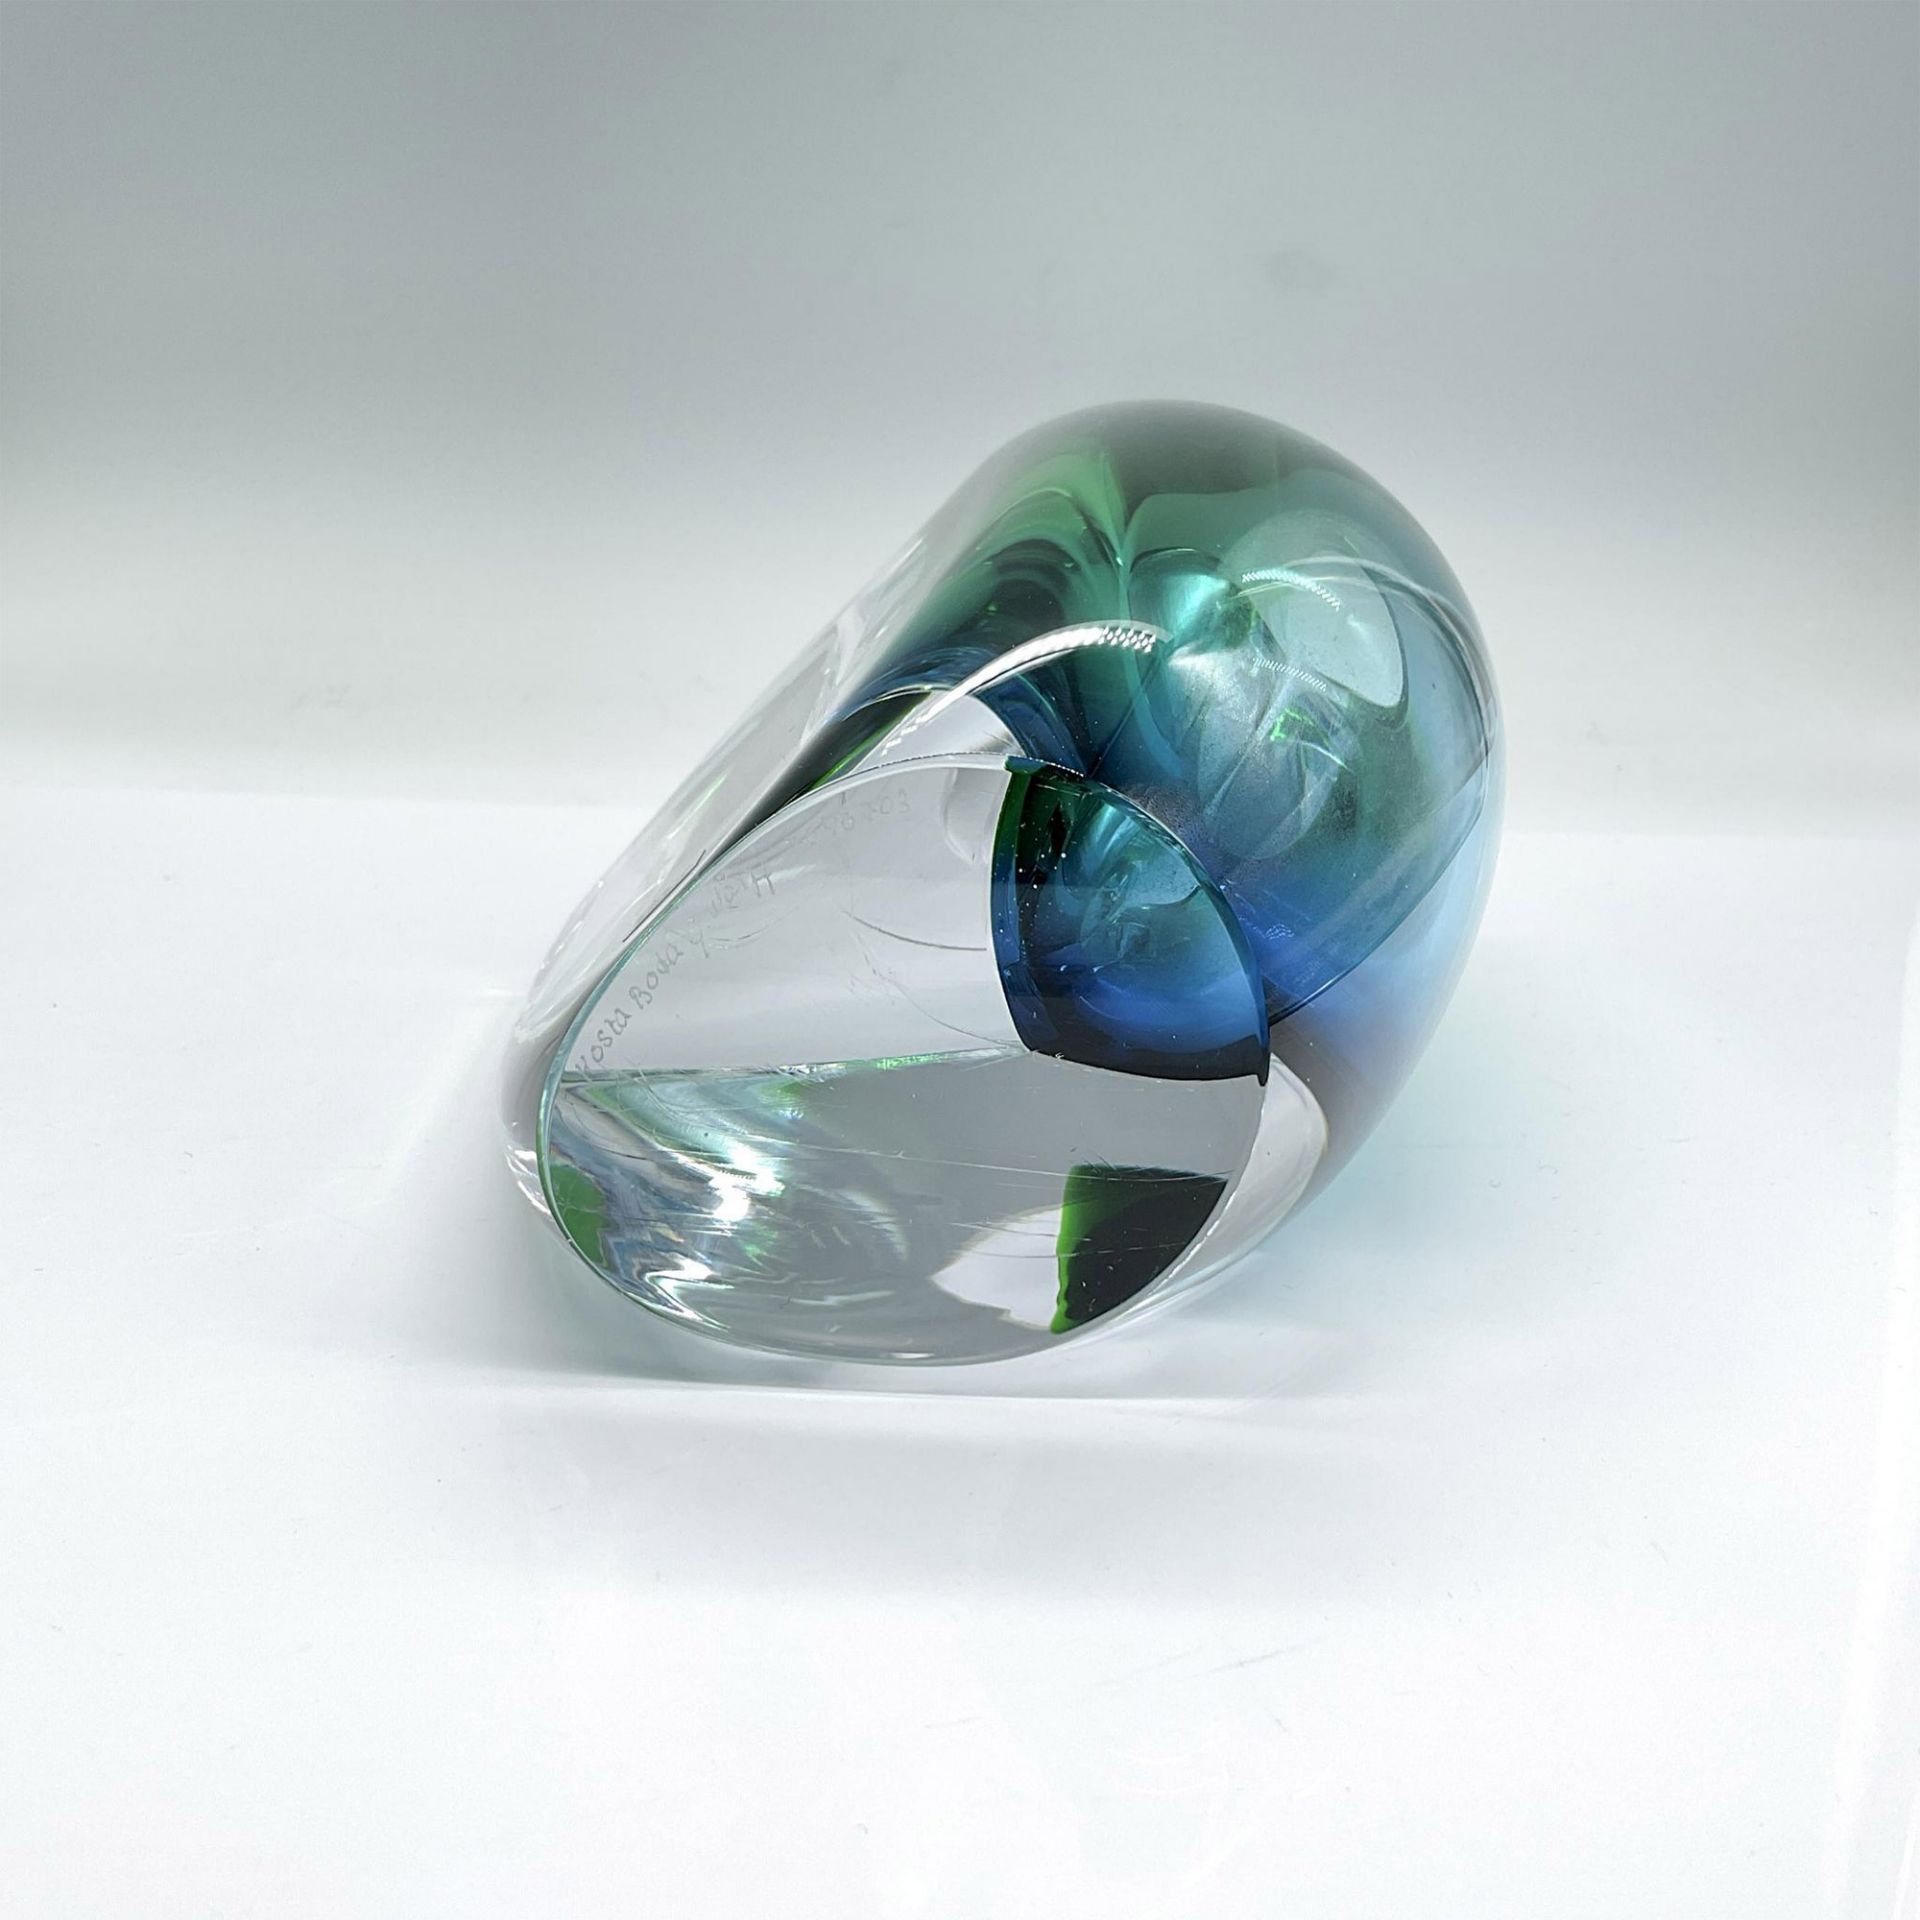 Kosta Boda Glass Vase, Saraband Blue and Green - Image 3 of 3